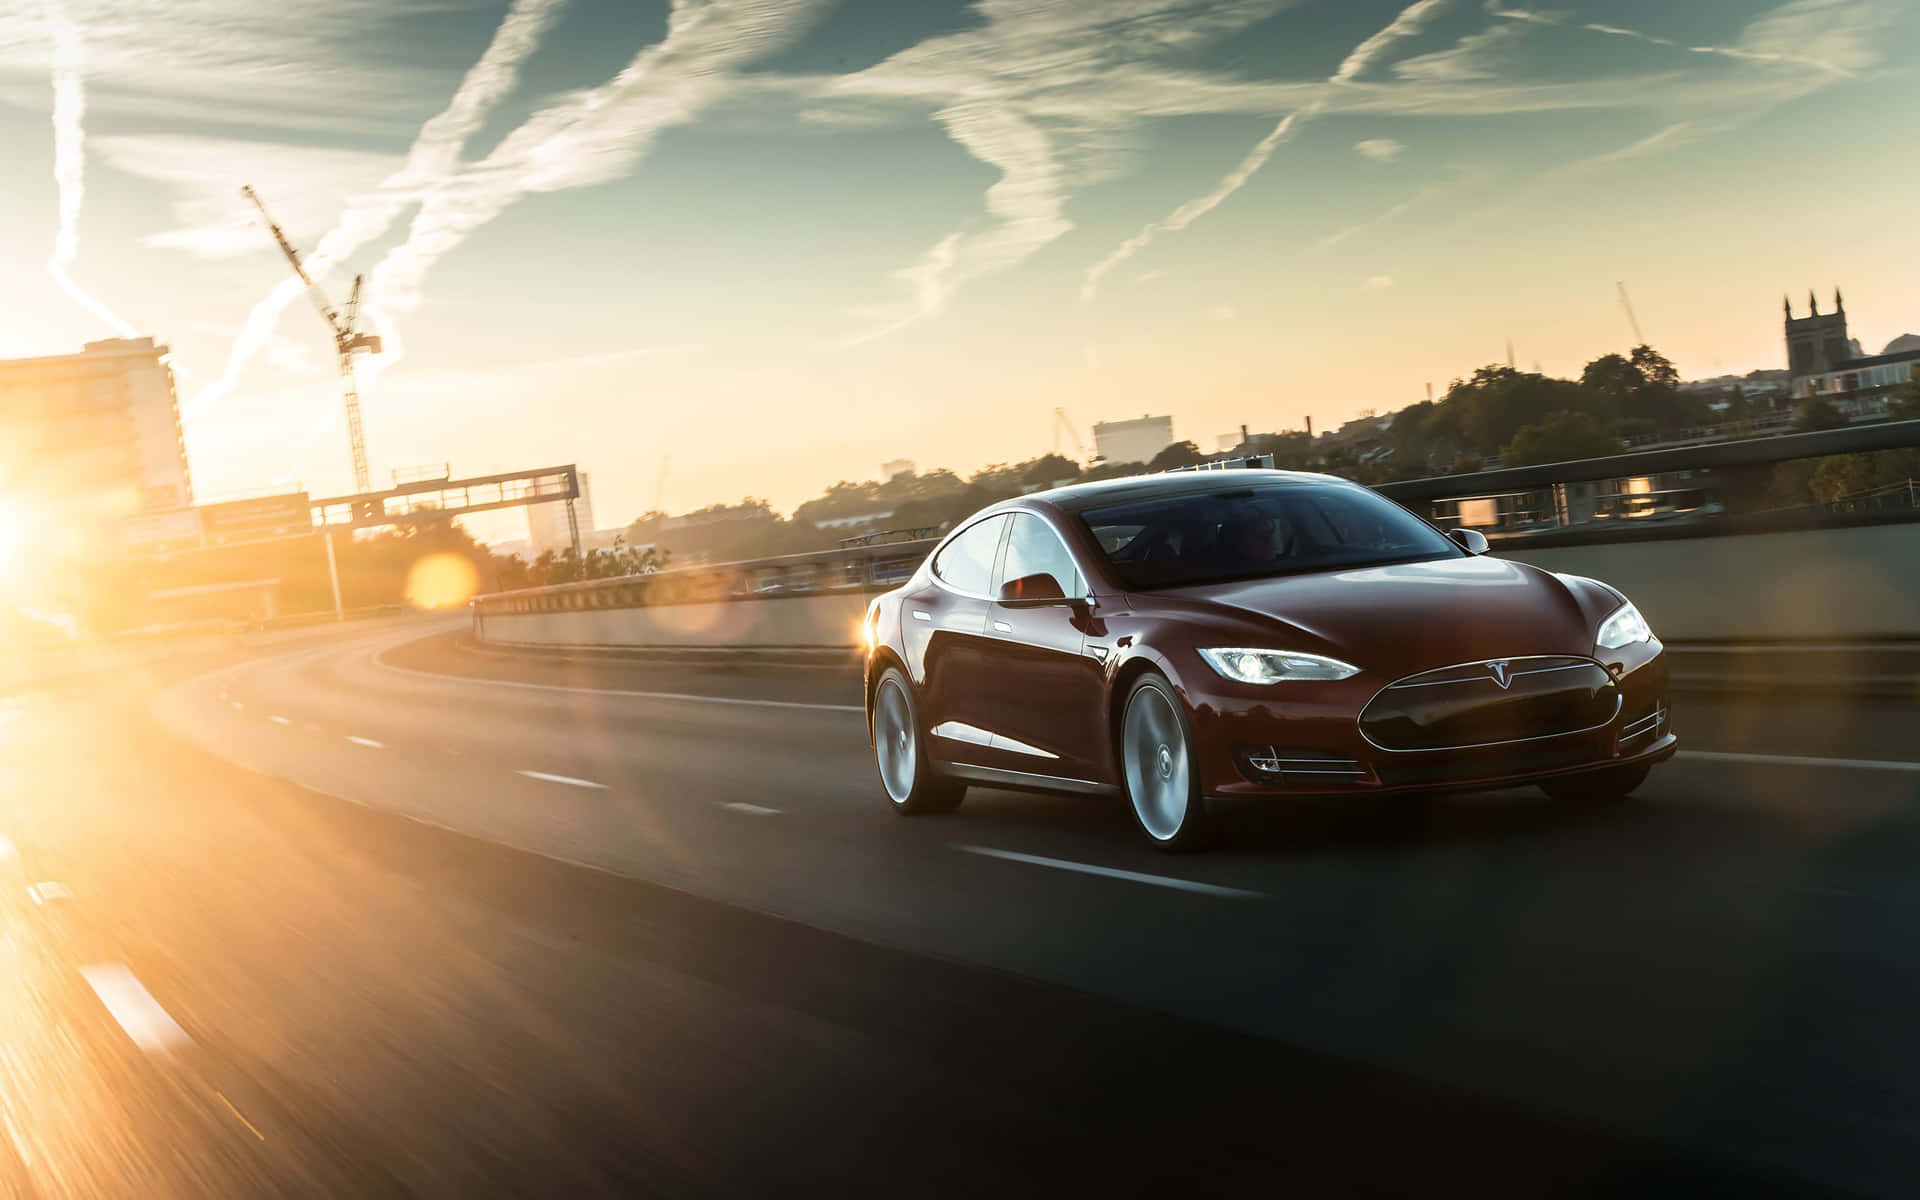 Straßenbildeines Tesla-autos